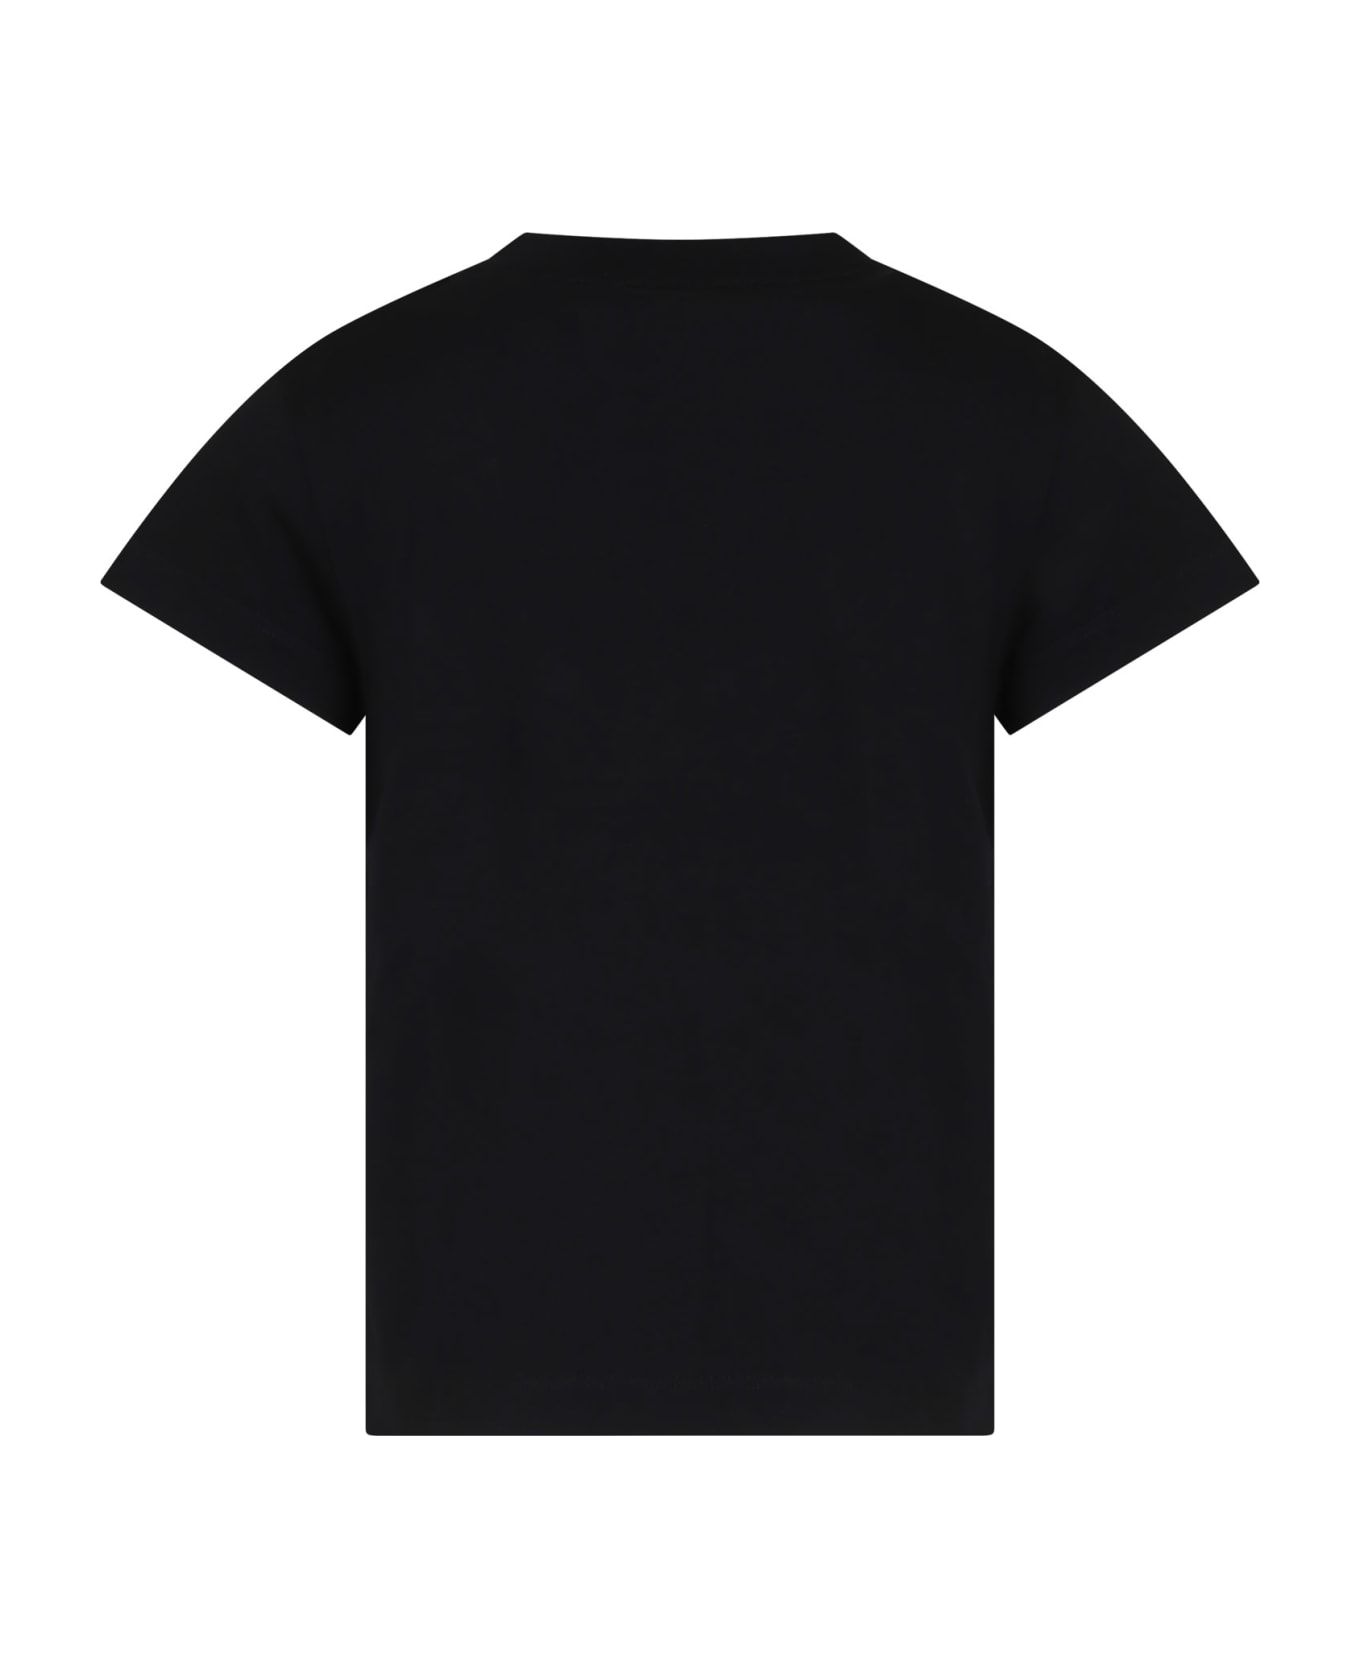 Balmain Black T-shirt For Girl With Logo And Studs - Black